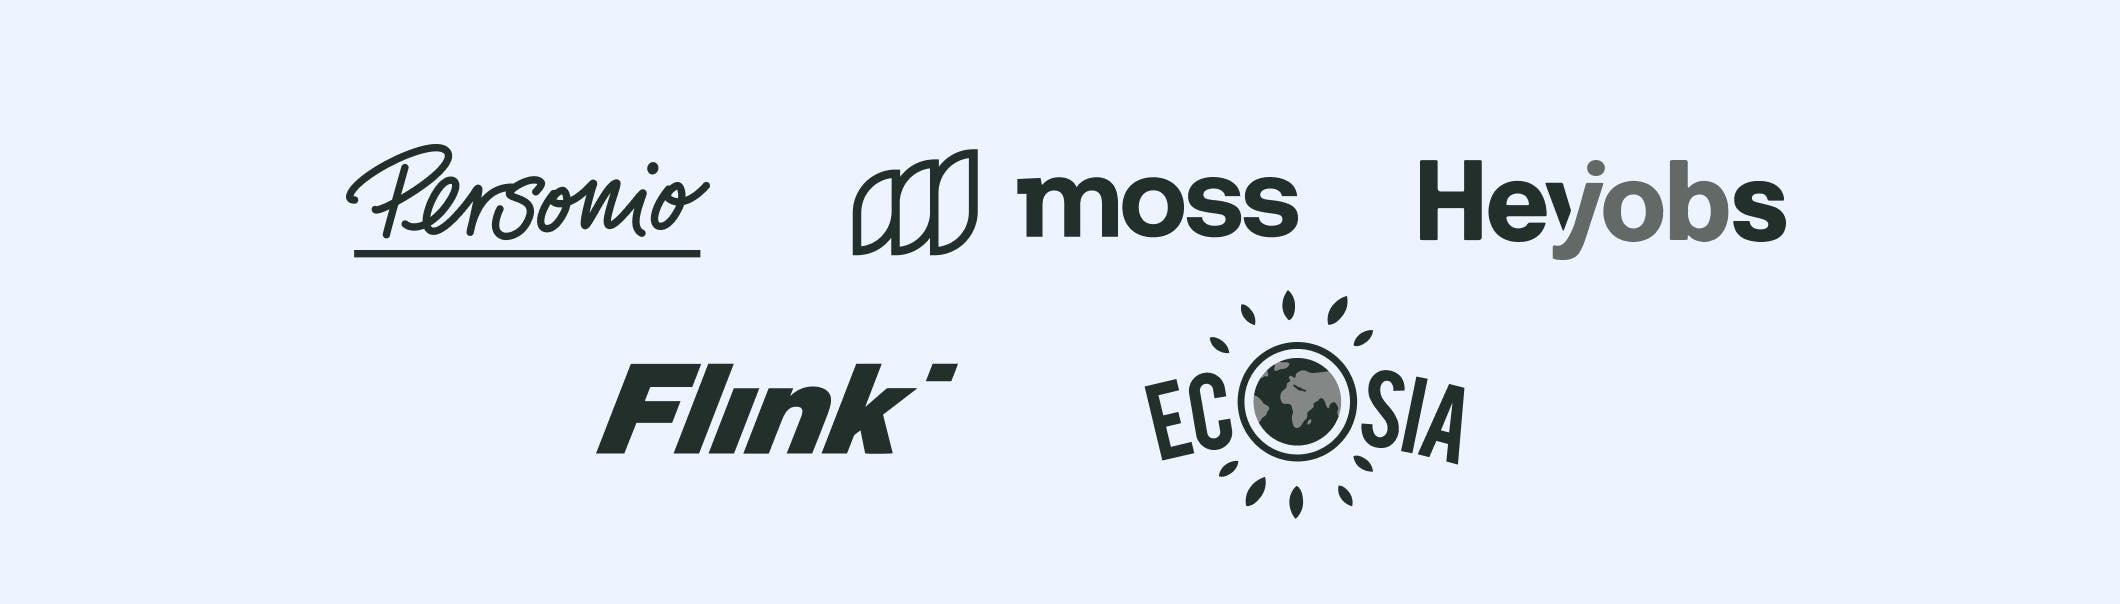 Logos for: Personio, Moss, Heyjobs, Flink, Ecosia